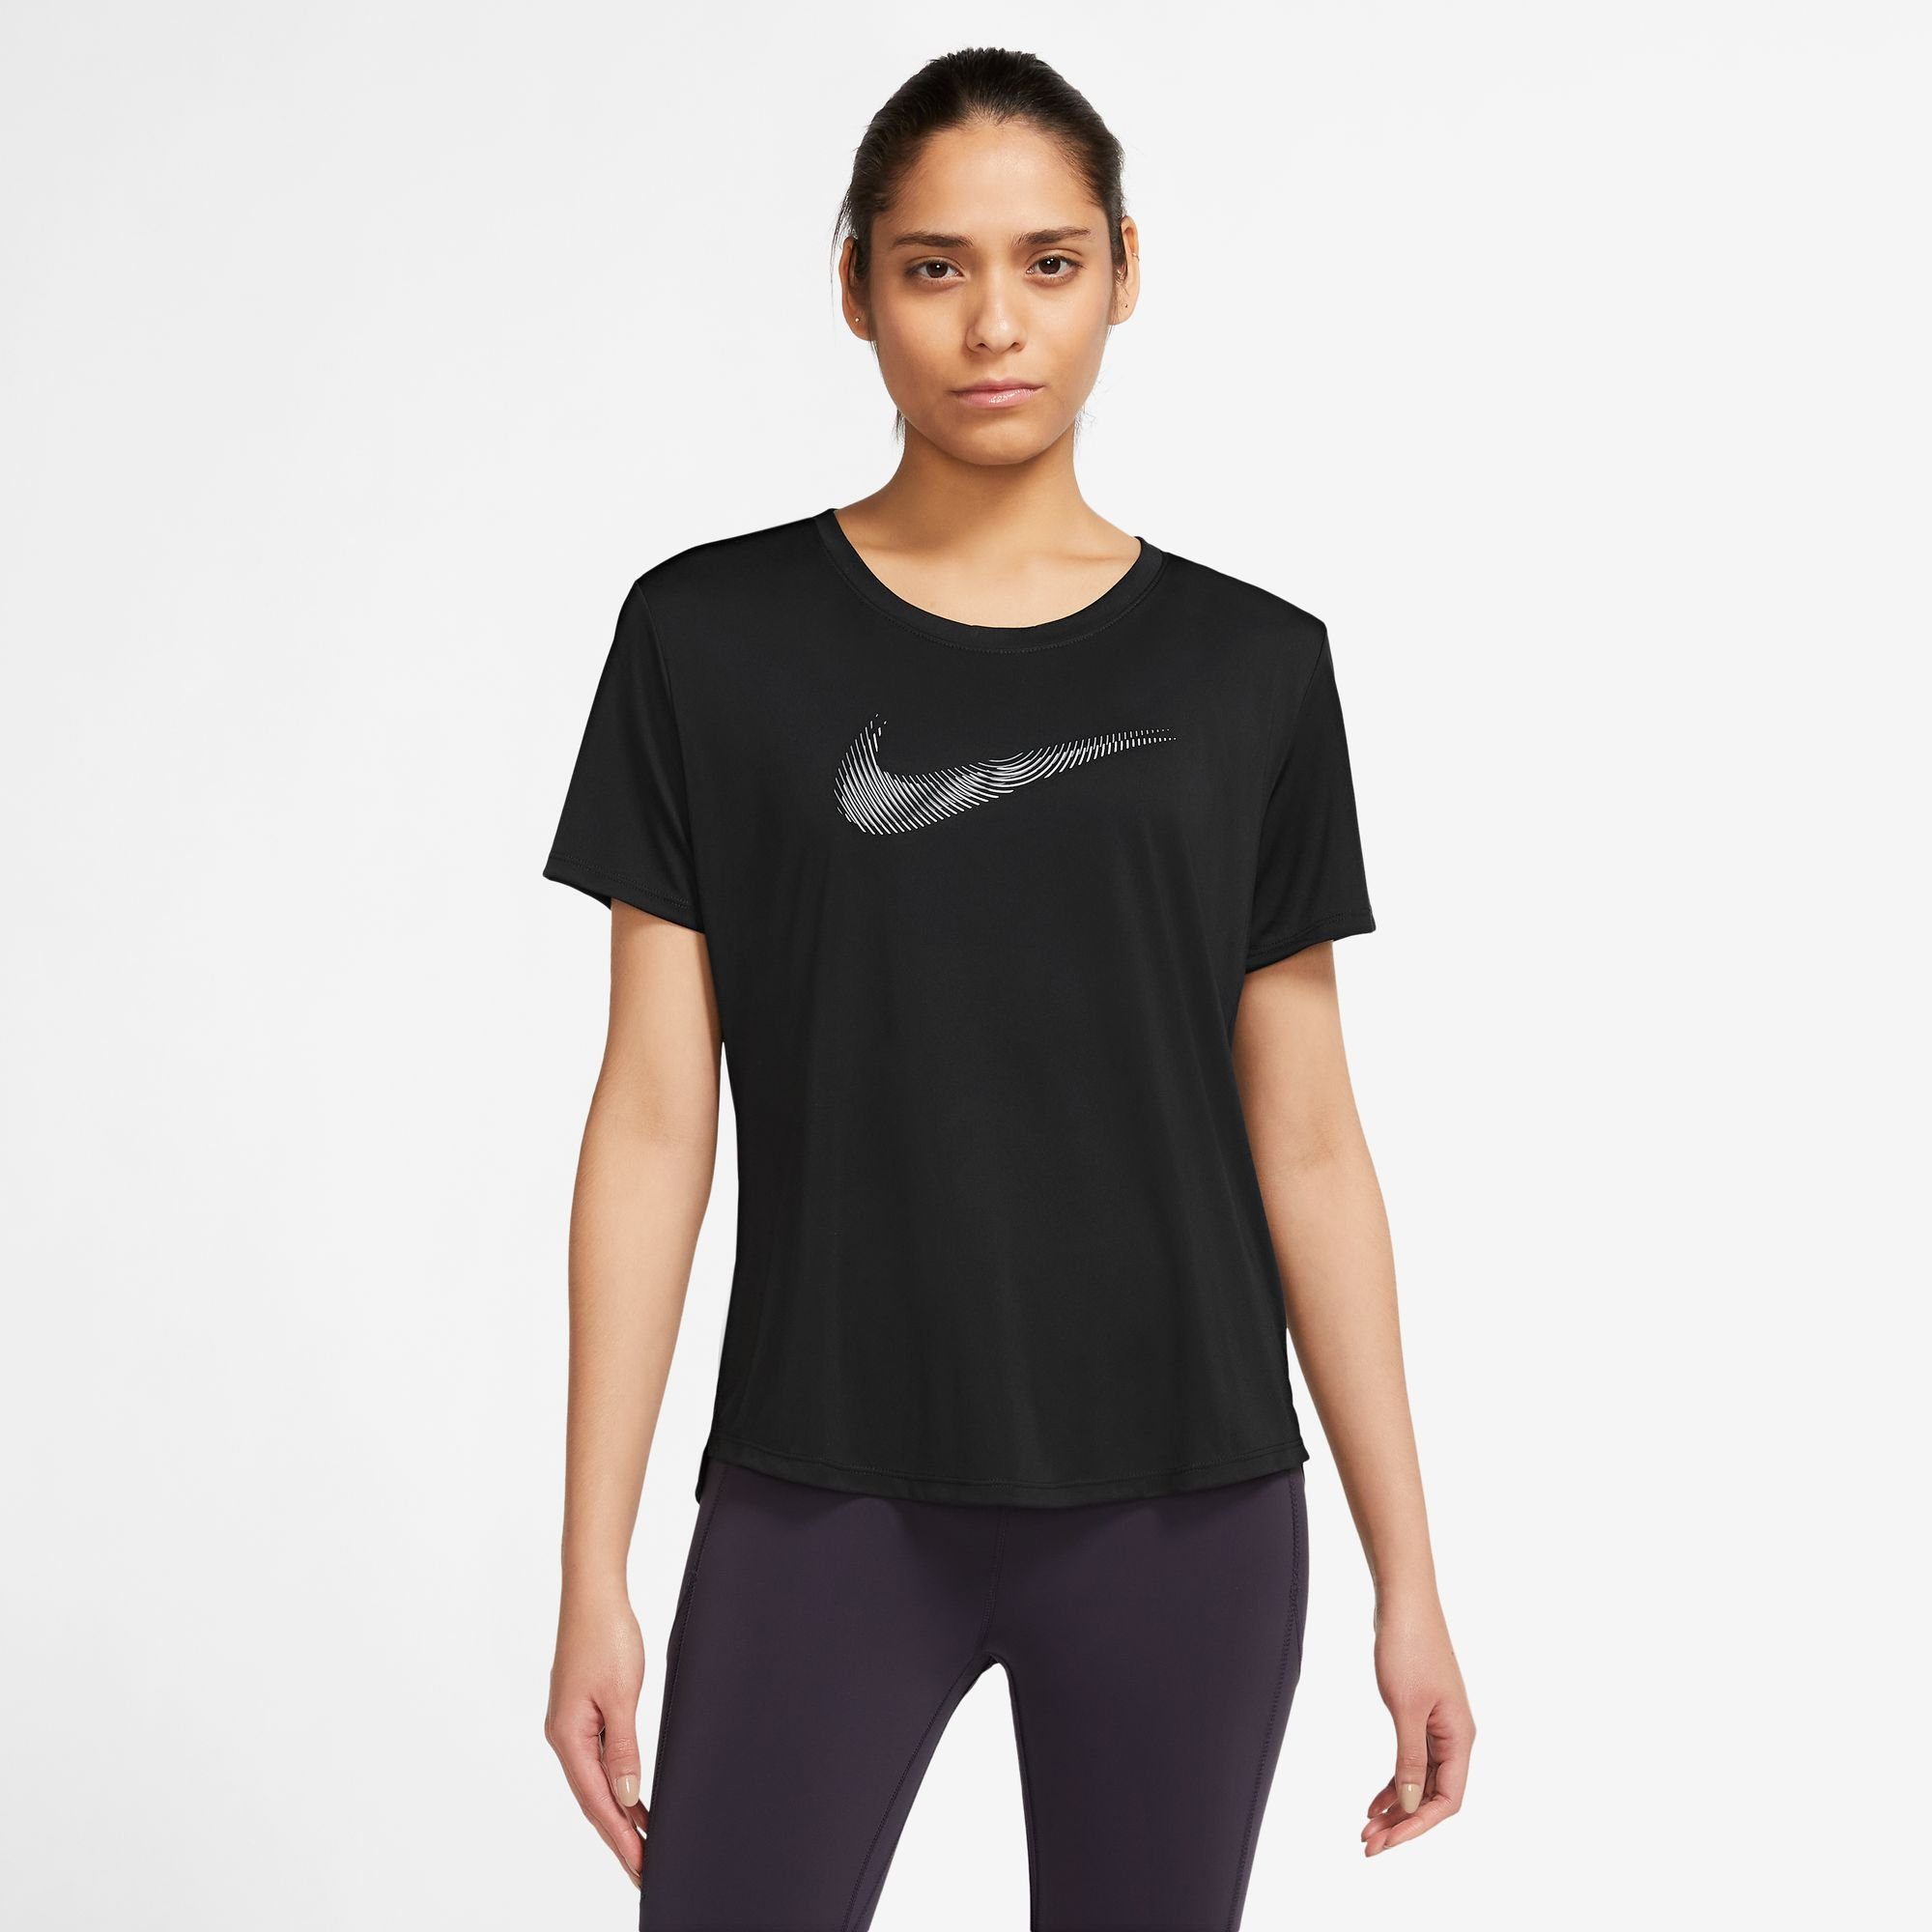 Nike Laufshirt DRI-FIT SWOOSH WOMEN'S RUNNING TOP GREY BLACK/COOL SHORT-SLEEVE